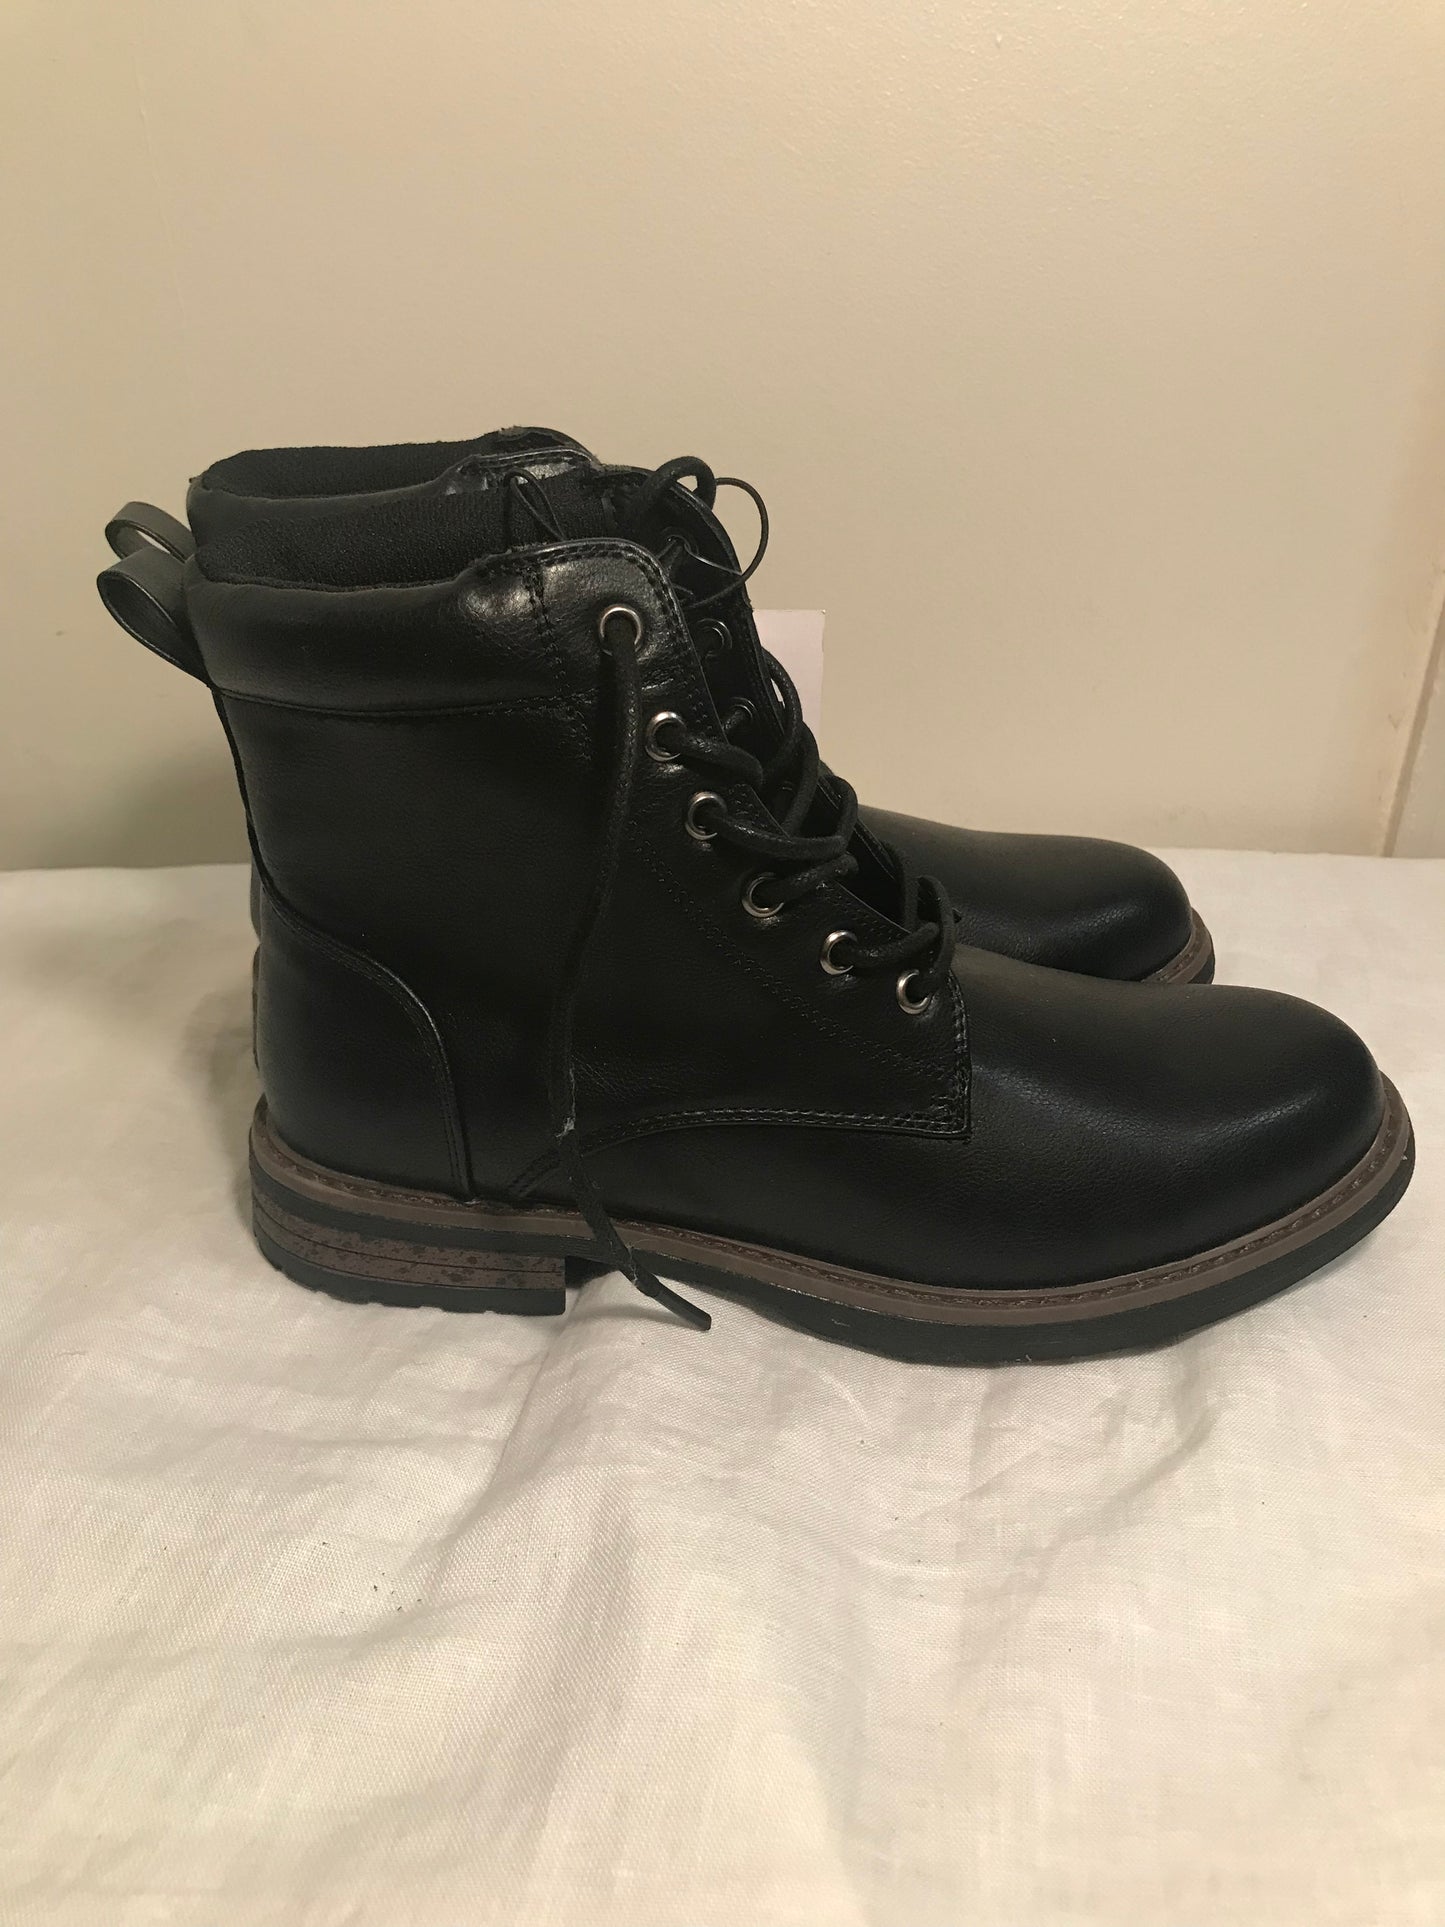 Boy's Black/Jeffery Boots Size 7